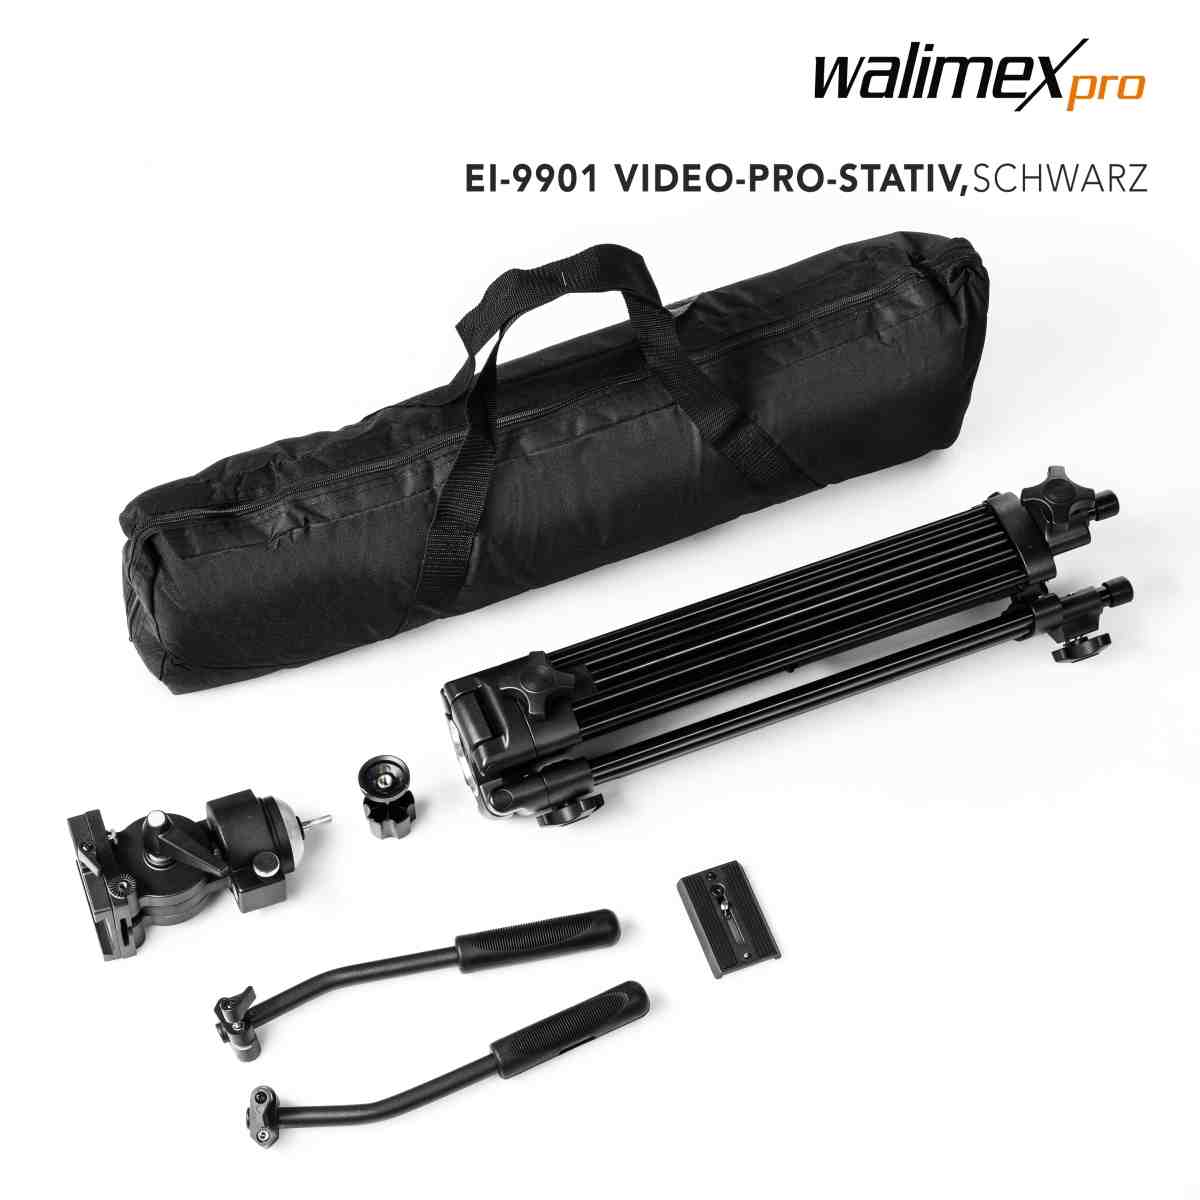 Walimex pro EI-9901 Video-Pro-Tripod, 138cm